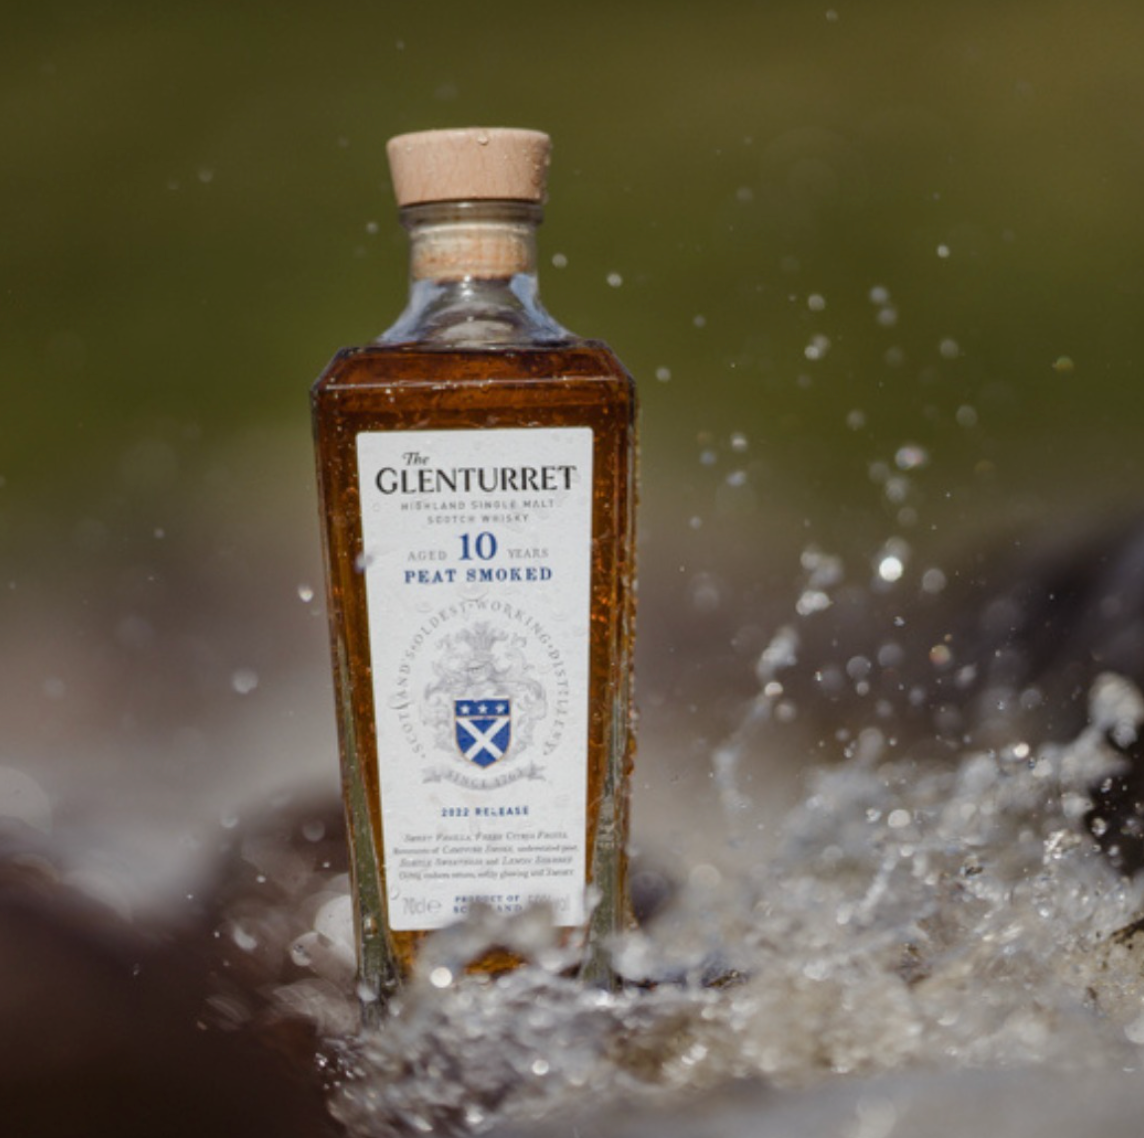 The Glenturret 10 Year Peat Smoked Scotch Whisky